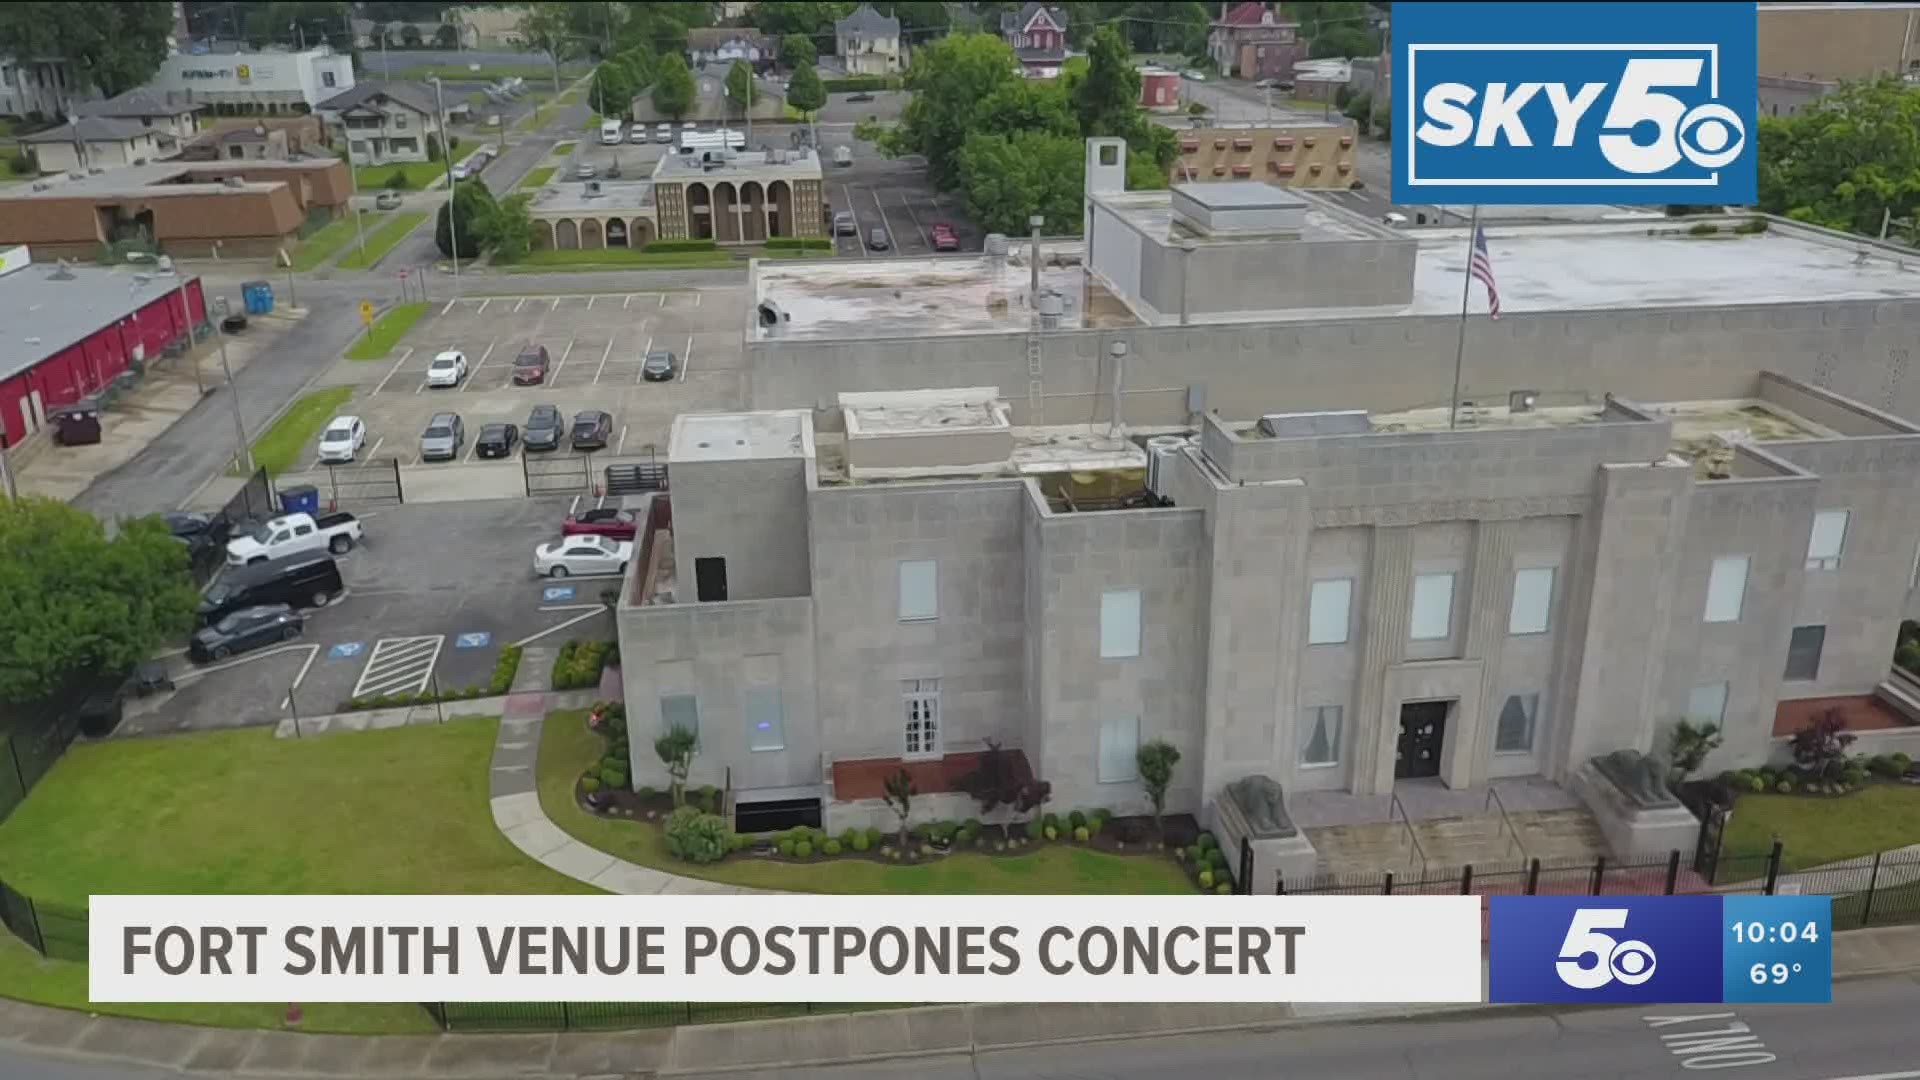 TempleLive in Fort Smith postpones concert